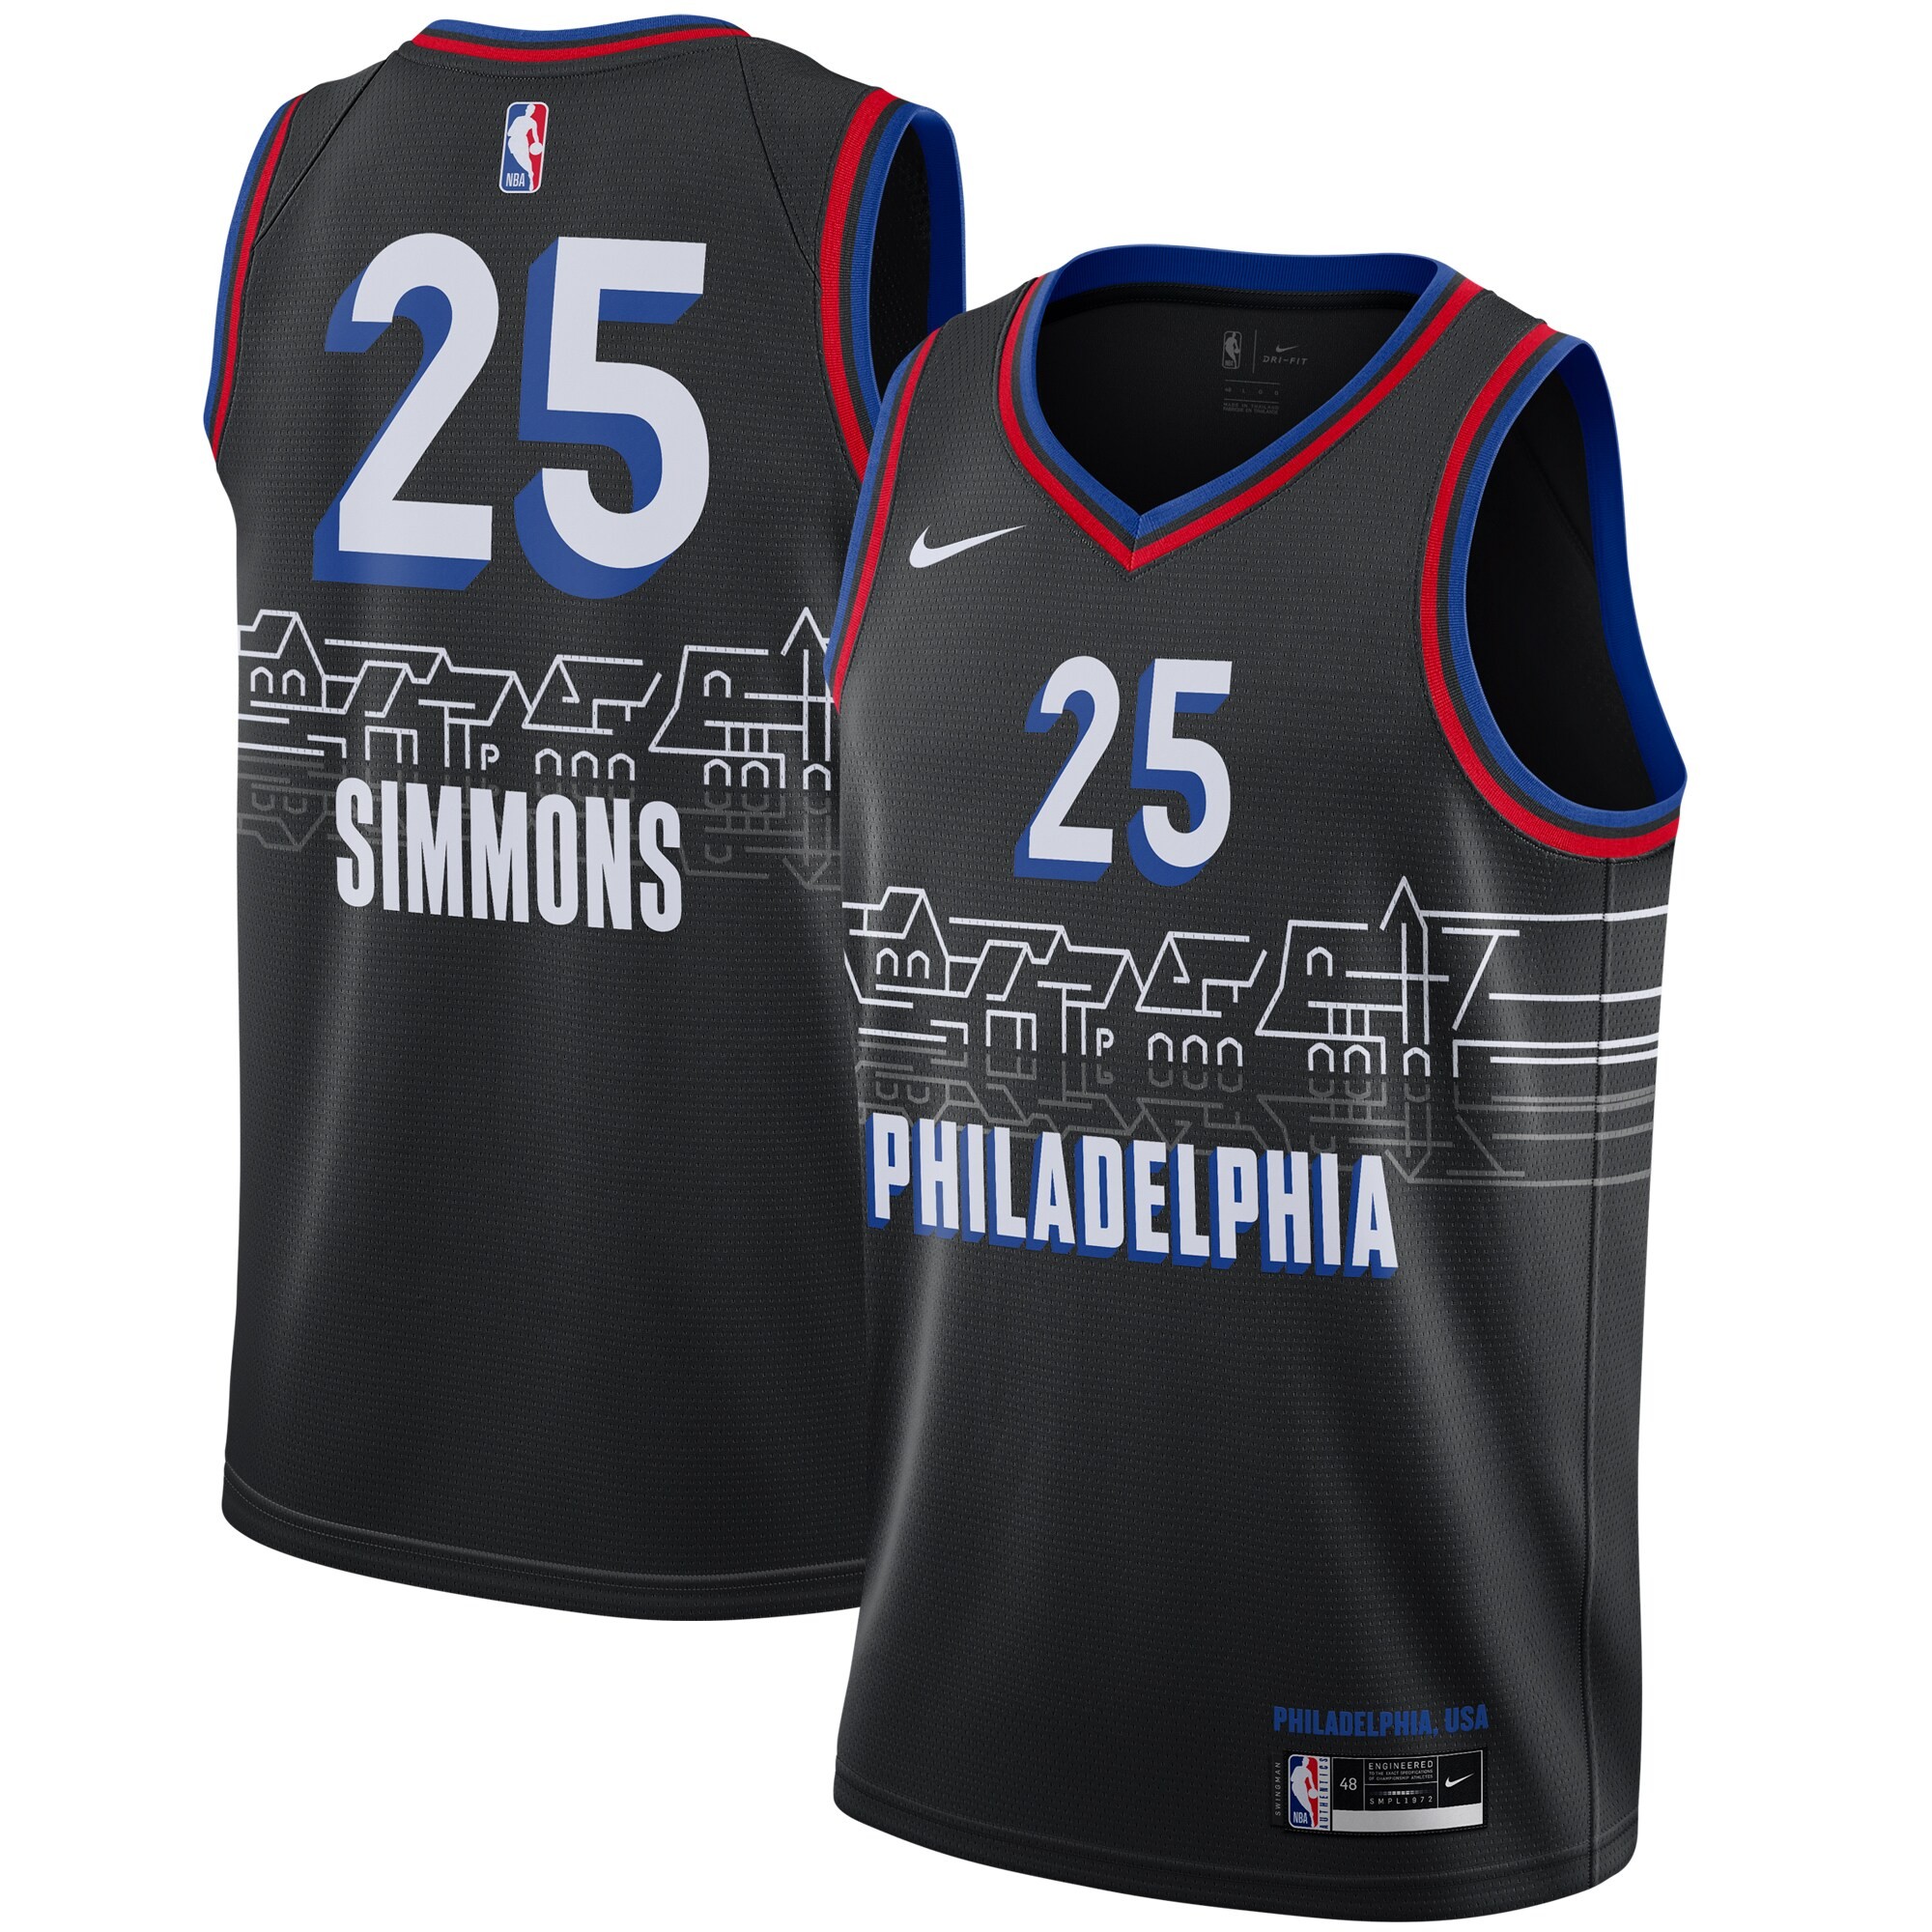 Available Now Philadelphia 76ers Nike City Edition jerseys